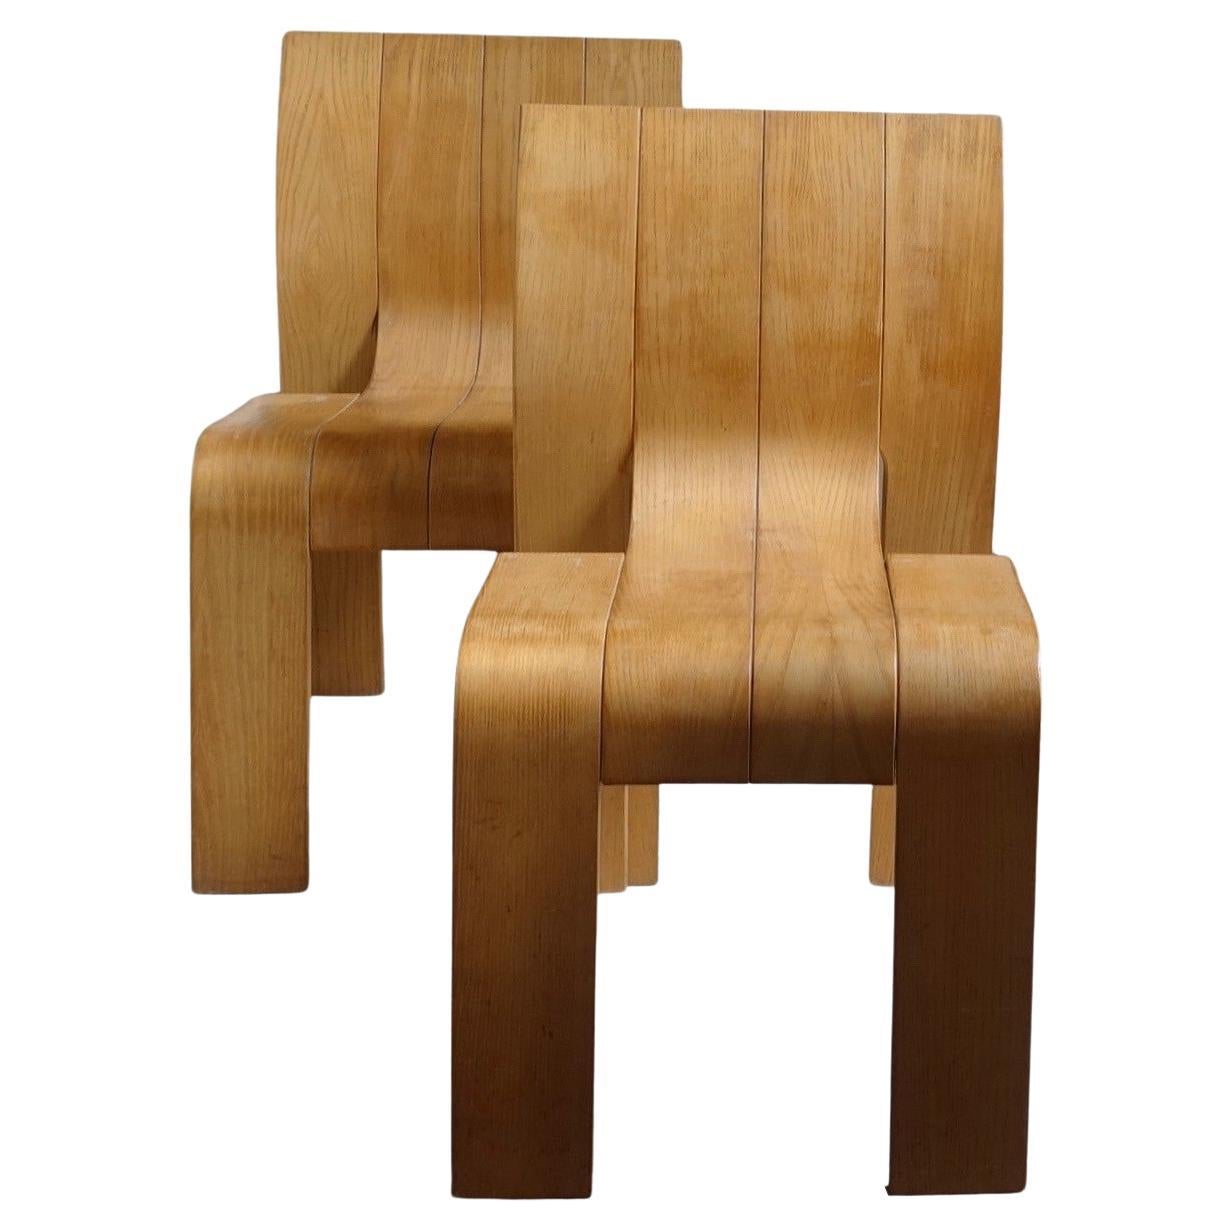 Gijs Bakker for Castelijn, Two Strip Chairs, 1970